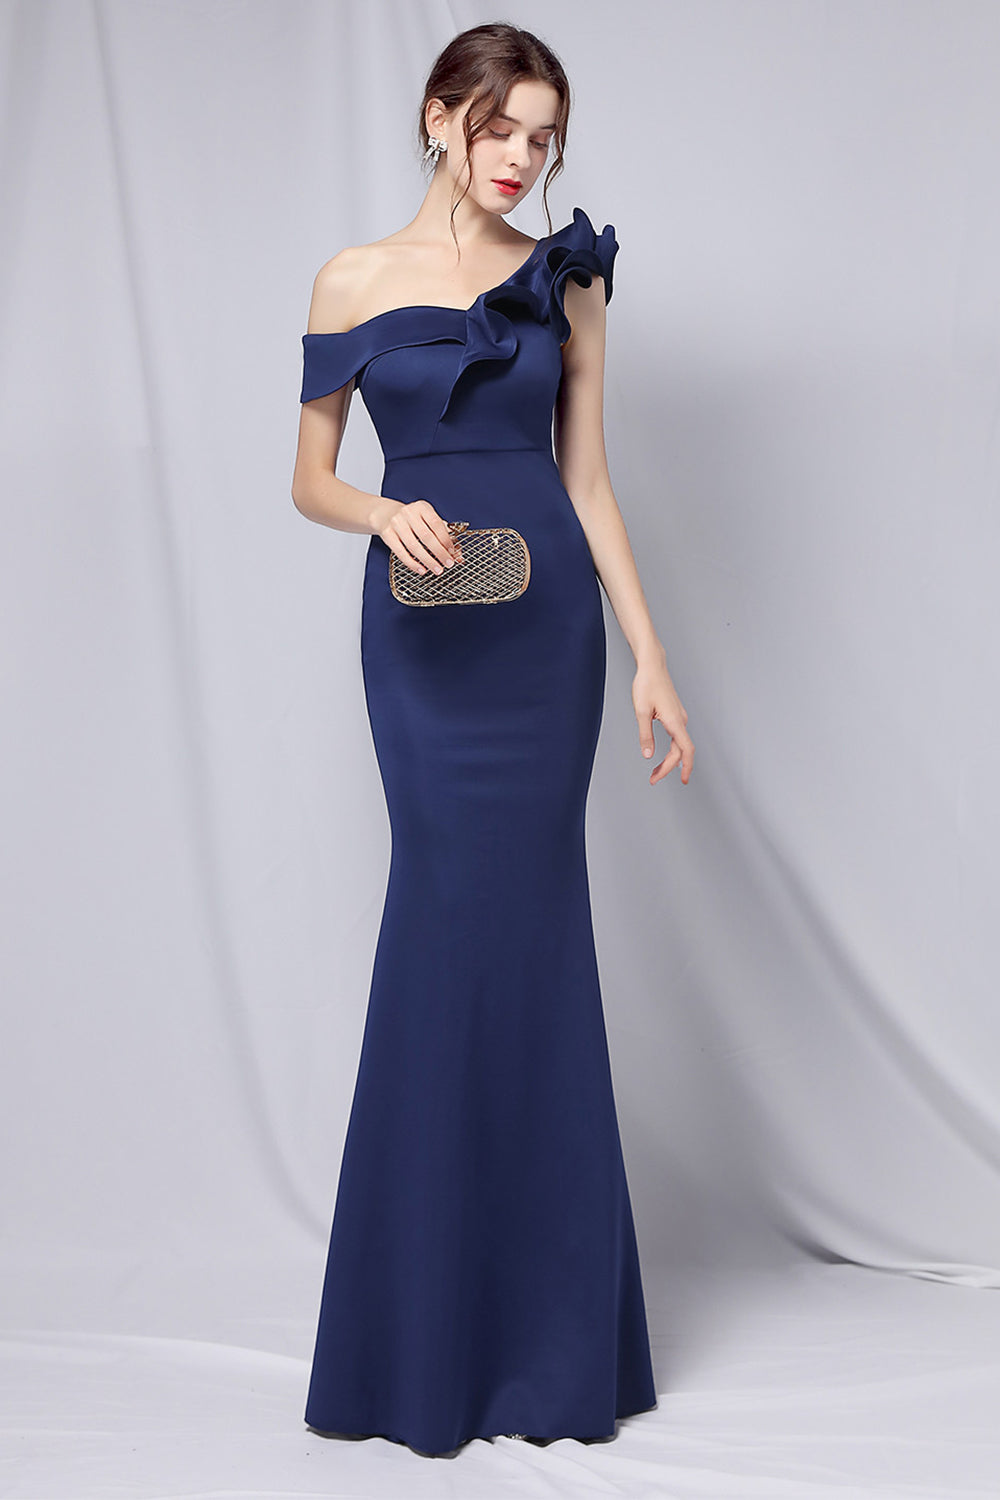 ZAPAKA Women Burgundy Prom Dress One Shoulder Simple Evening Dress